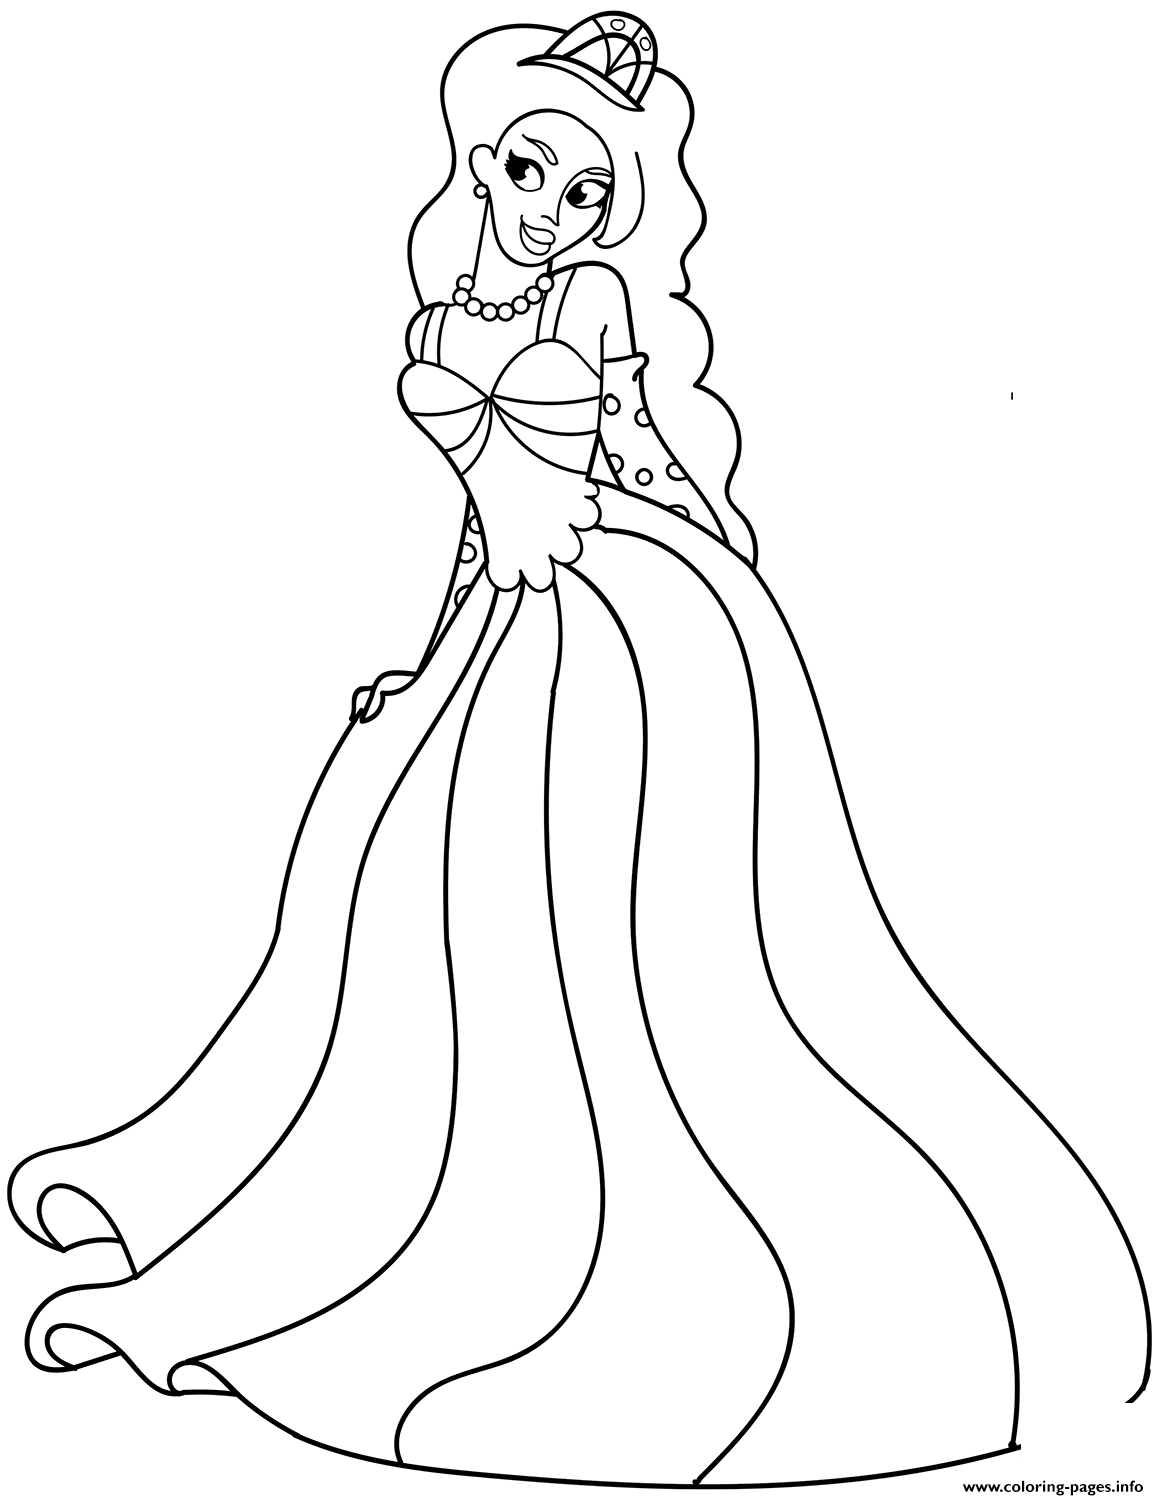 Sovereign Princess coloring